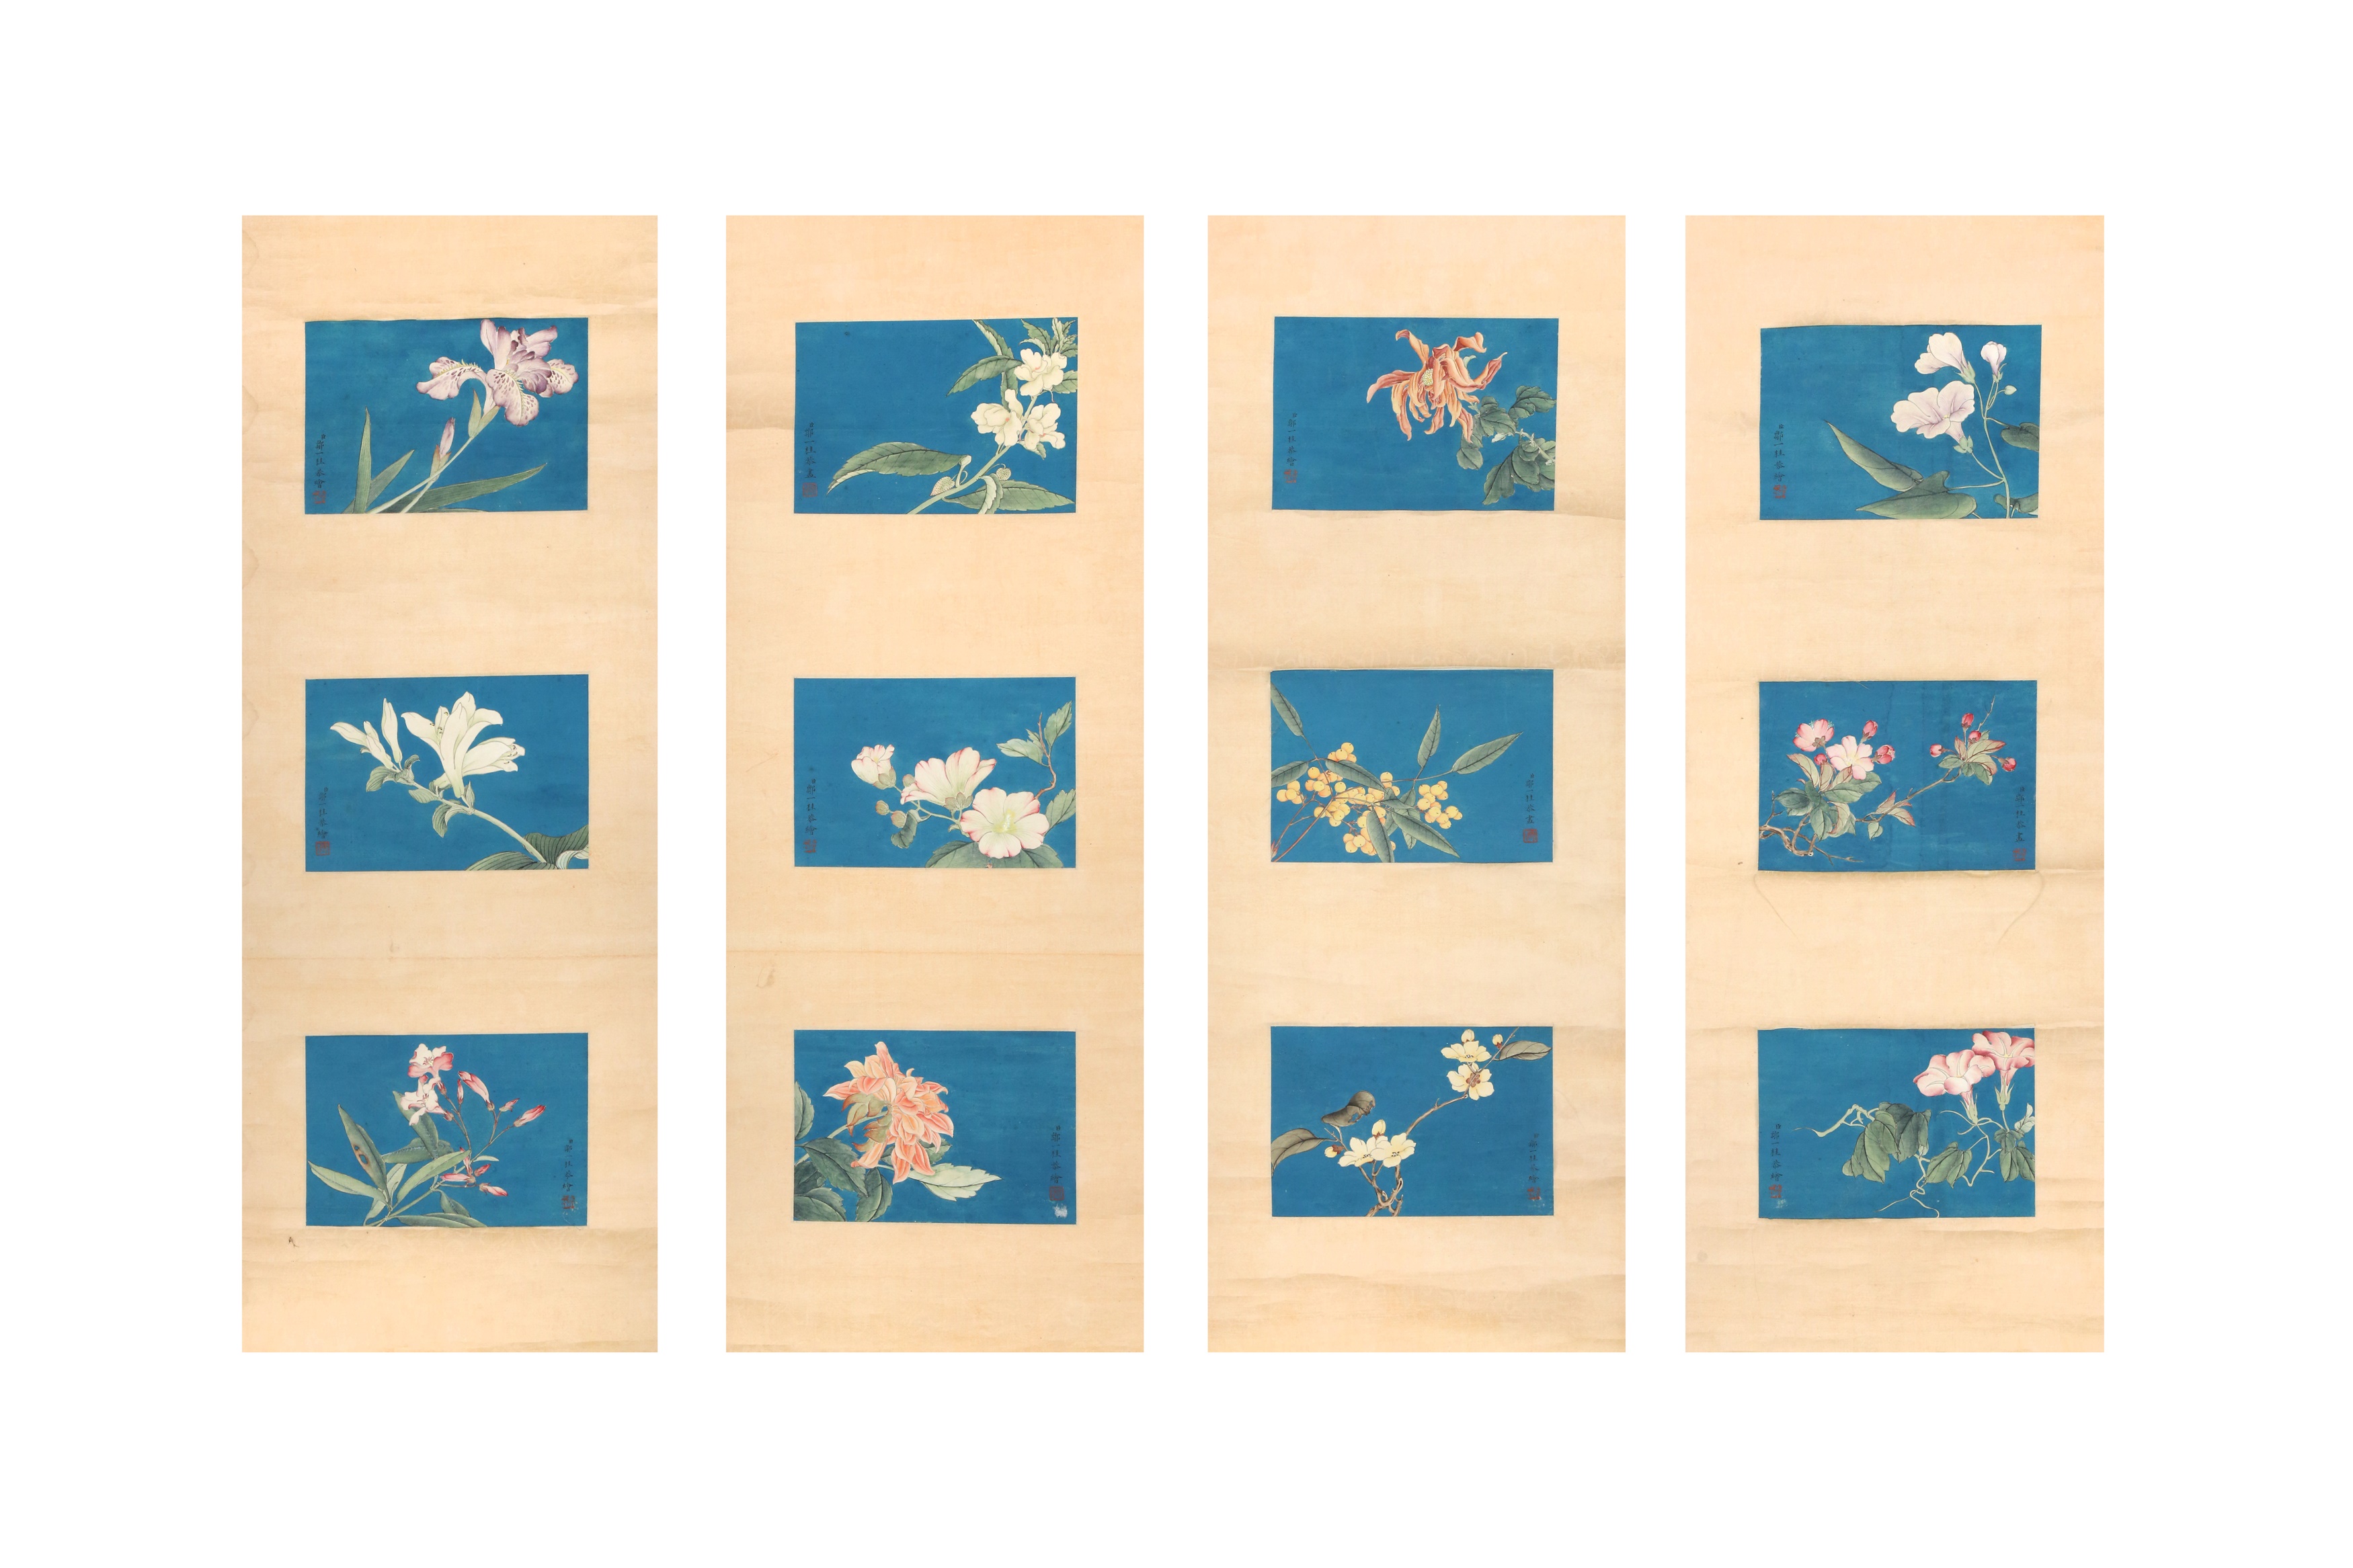 ZOU YIGUI 鄒一桂 (Wuxi, China, 1686 - 1772) Four flower paintings 花卉軸四件